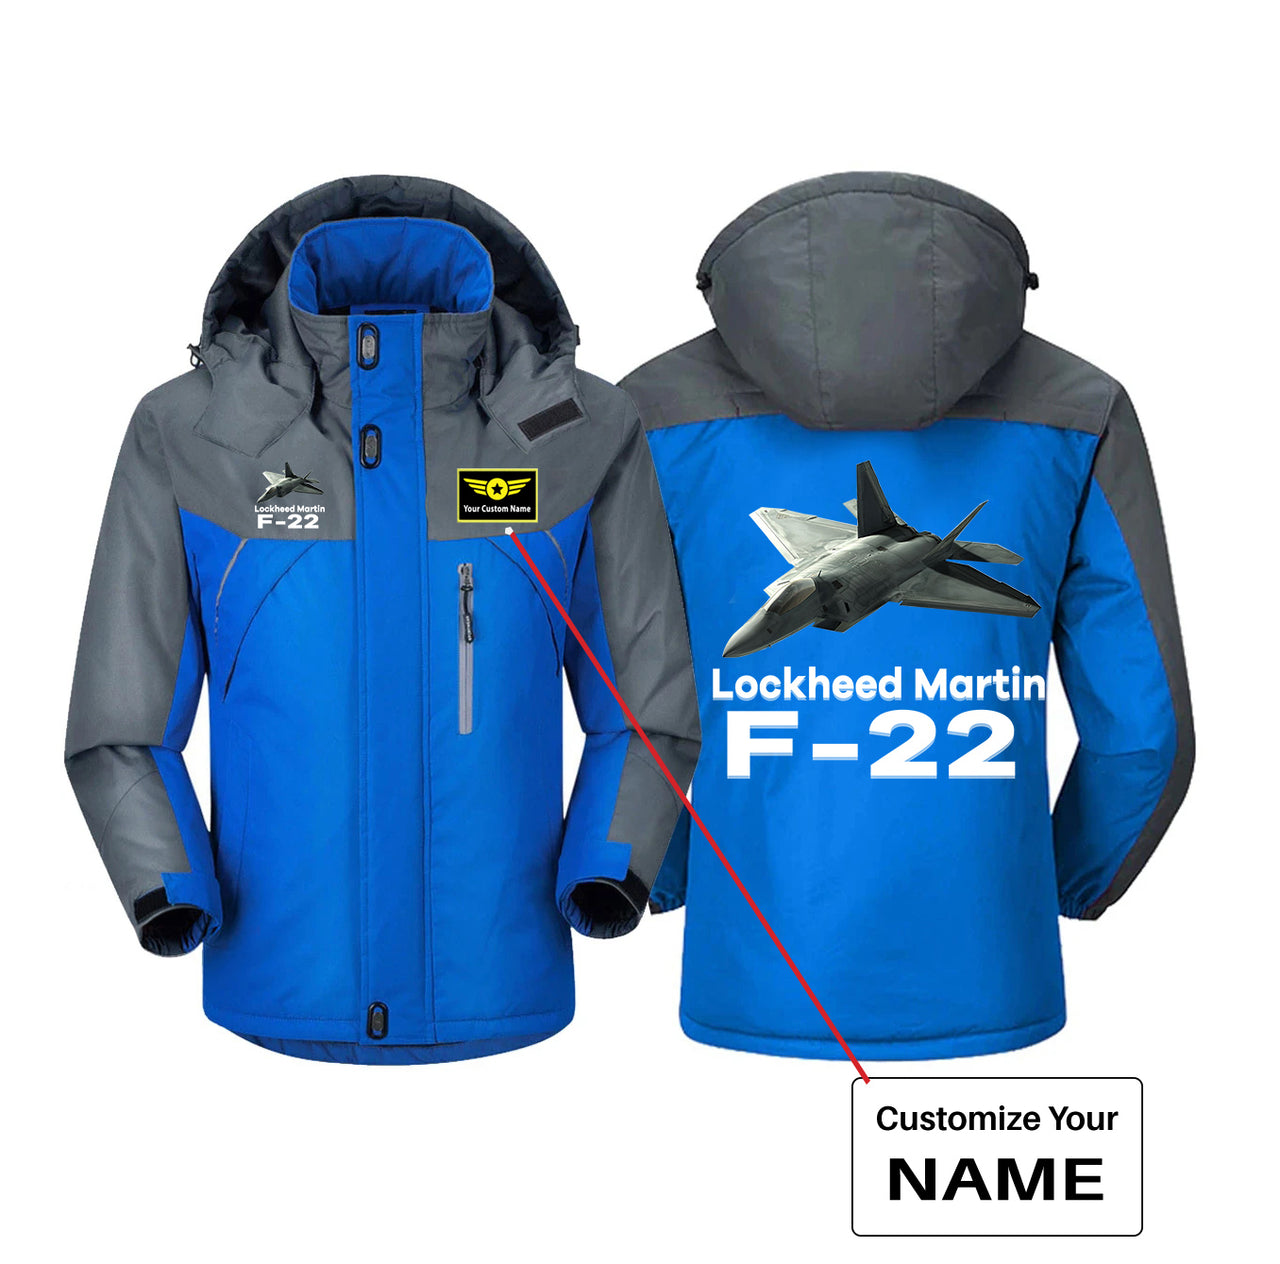 The Lockheed Martin F22 Designed Thick Winter Jackets